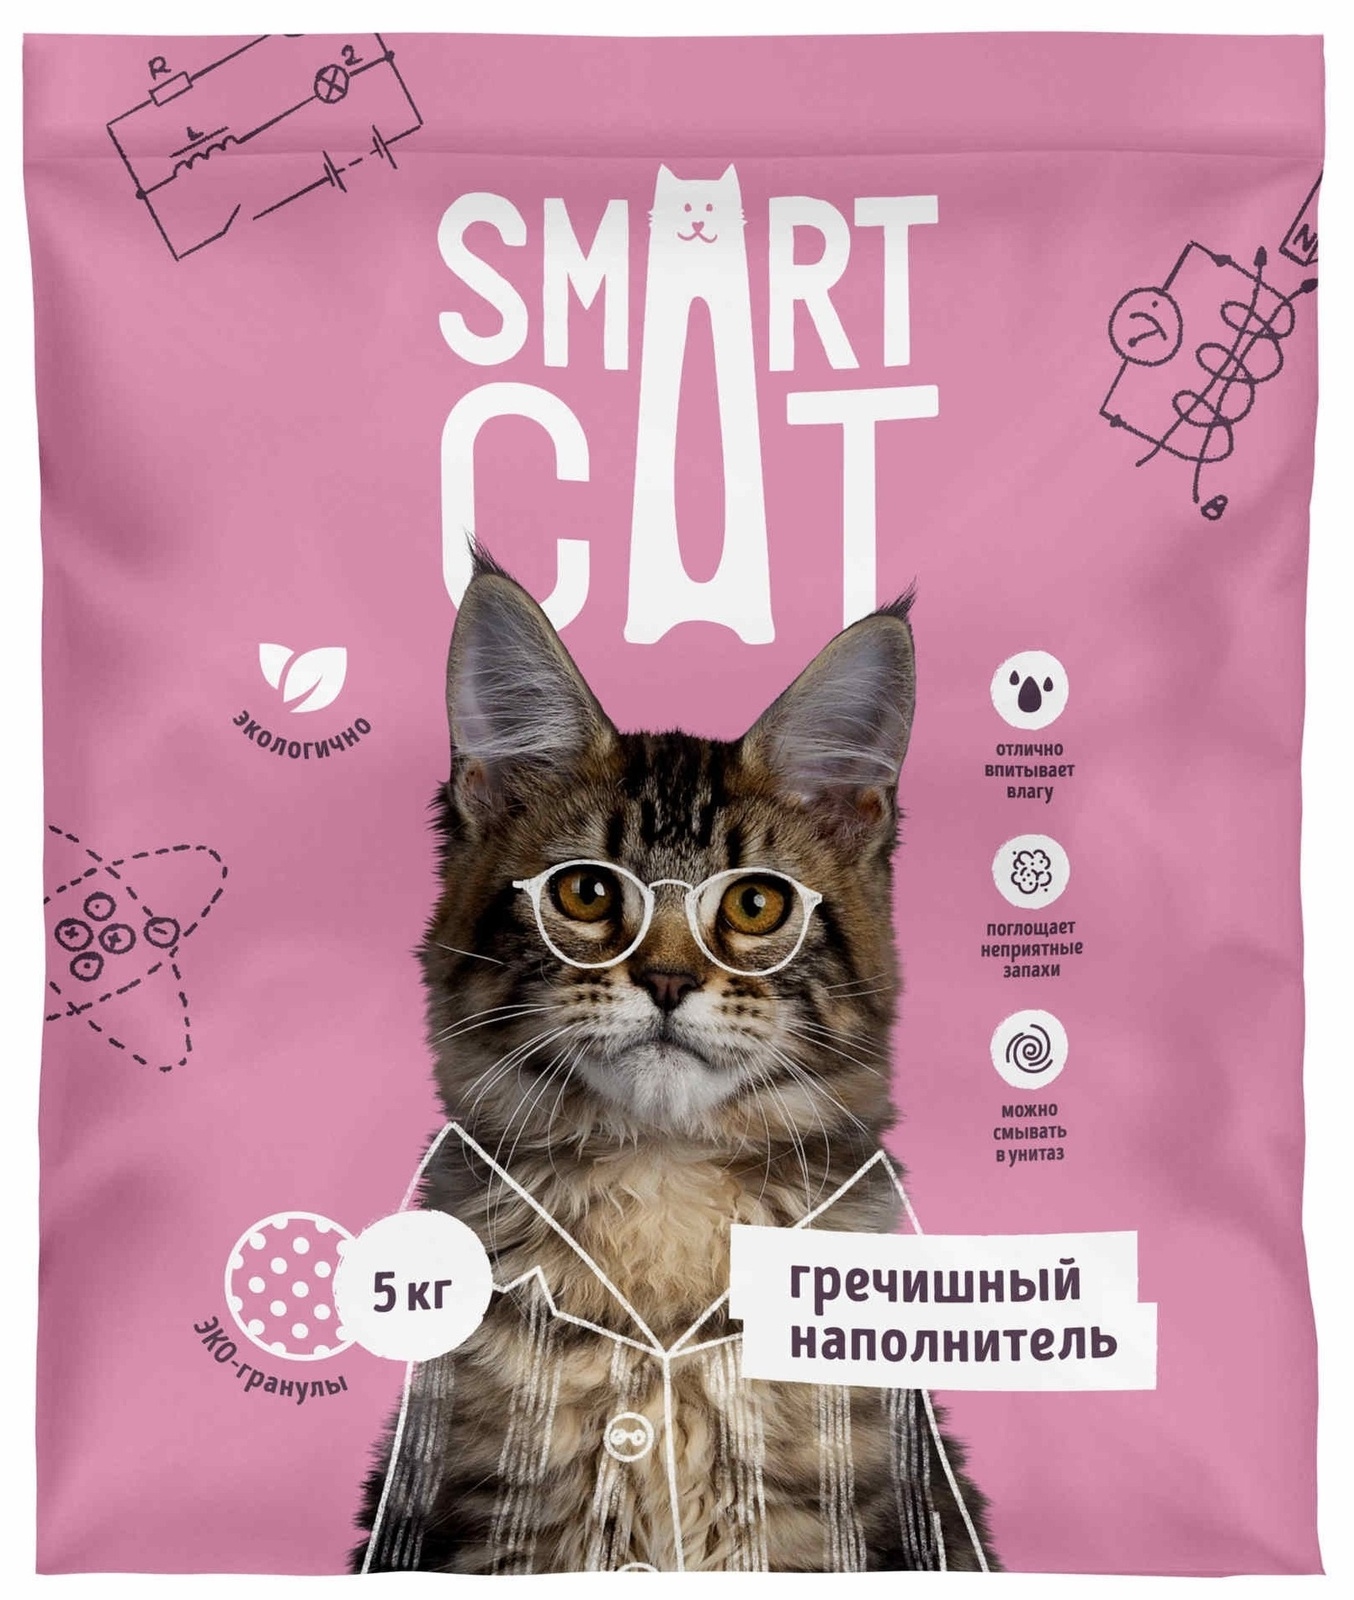 Smart Cat наполнитель Smart Cat наполнитель гречишный наполнитель (5 кг) smart cat наполнитель smart cat наполнитель впитывающий наполнитель средняя фракция 5 кг